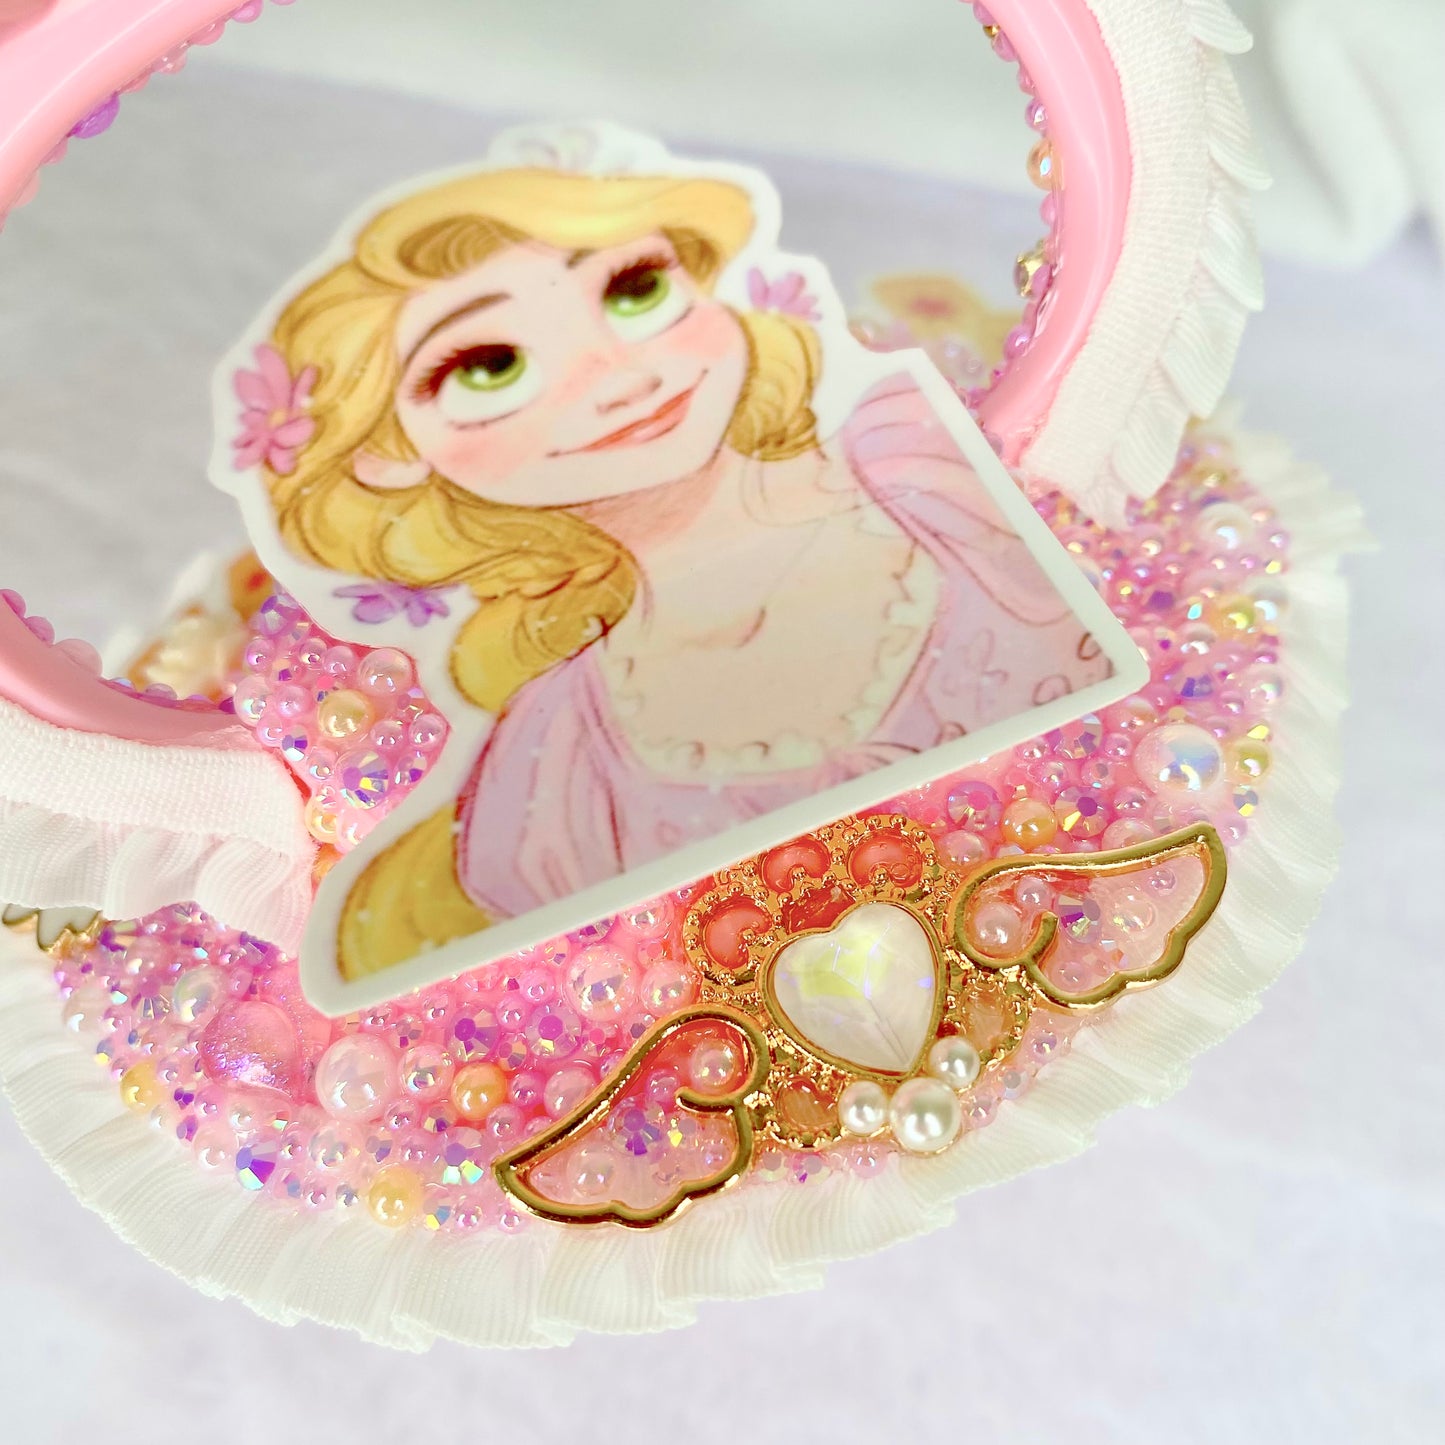 Lost Princess Rapunzel - Jumbo adult pacifier